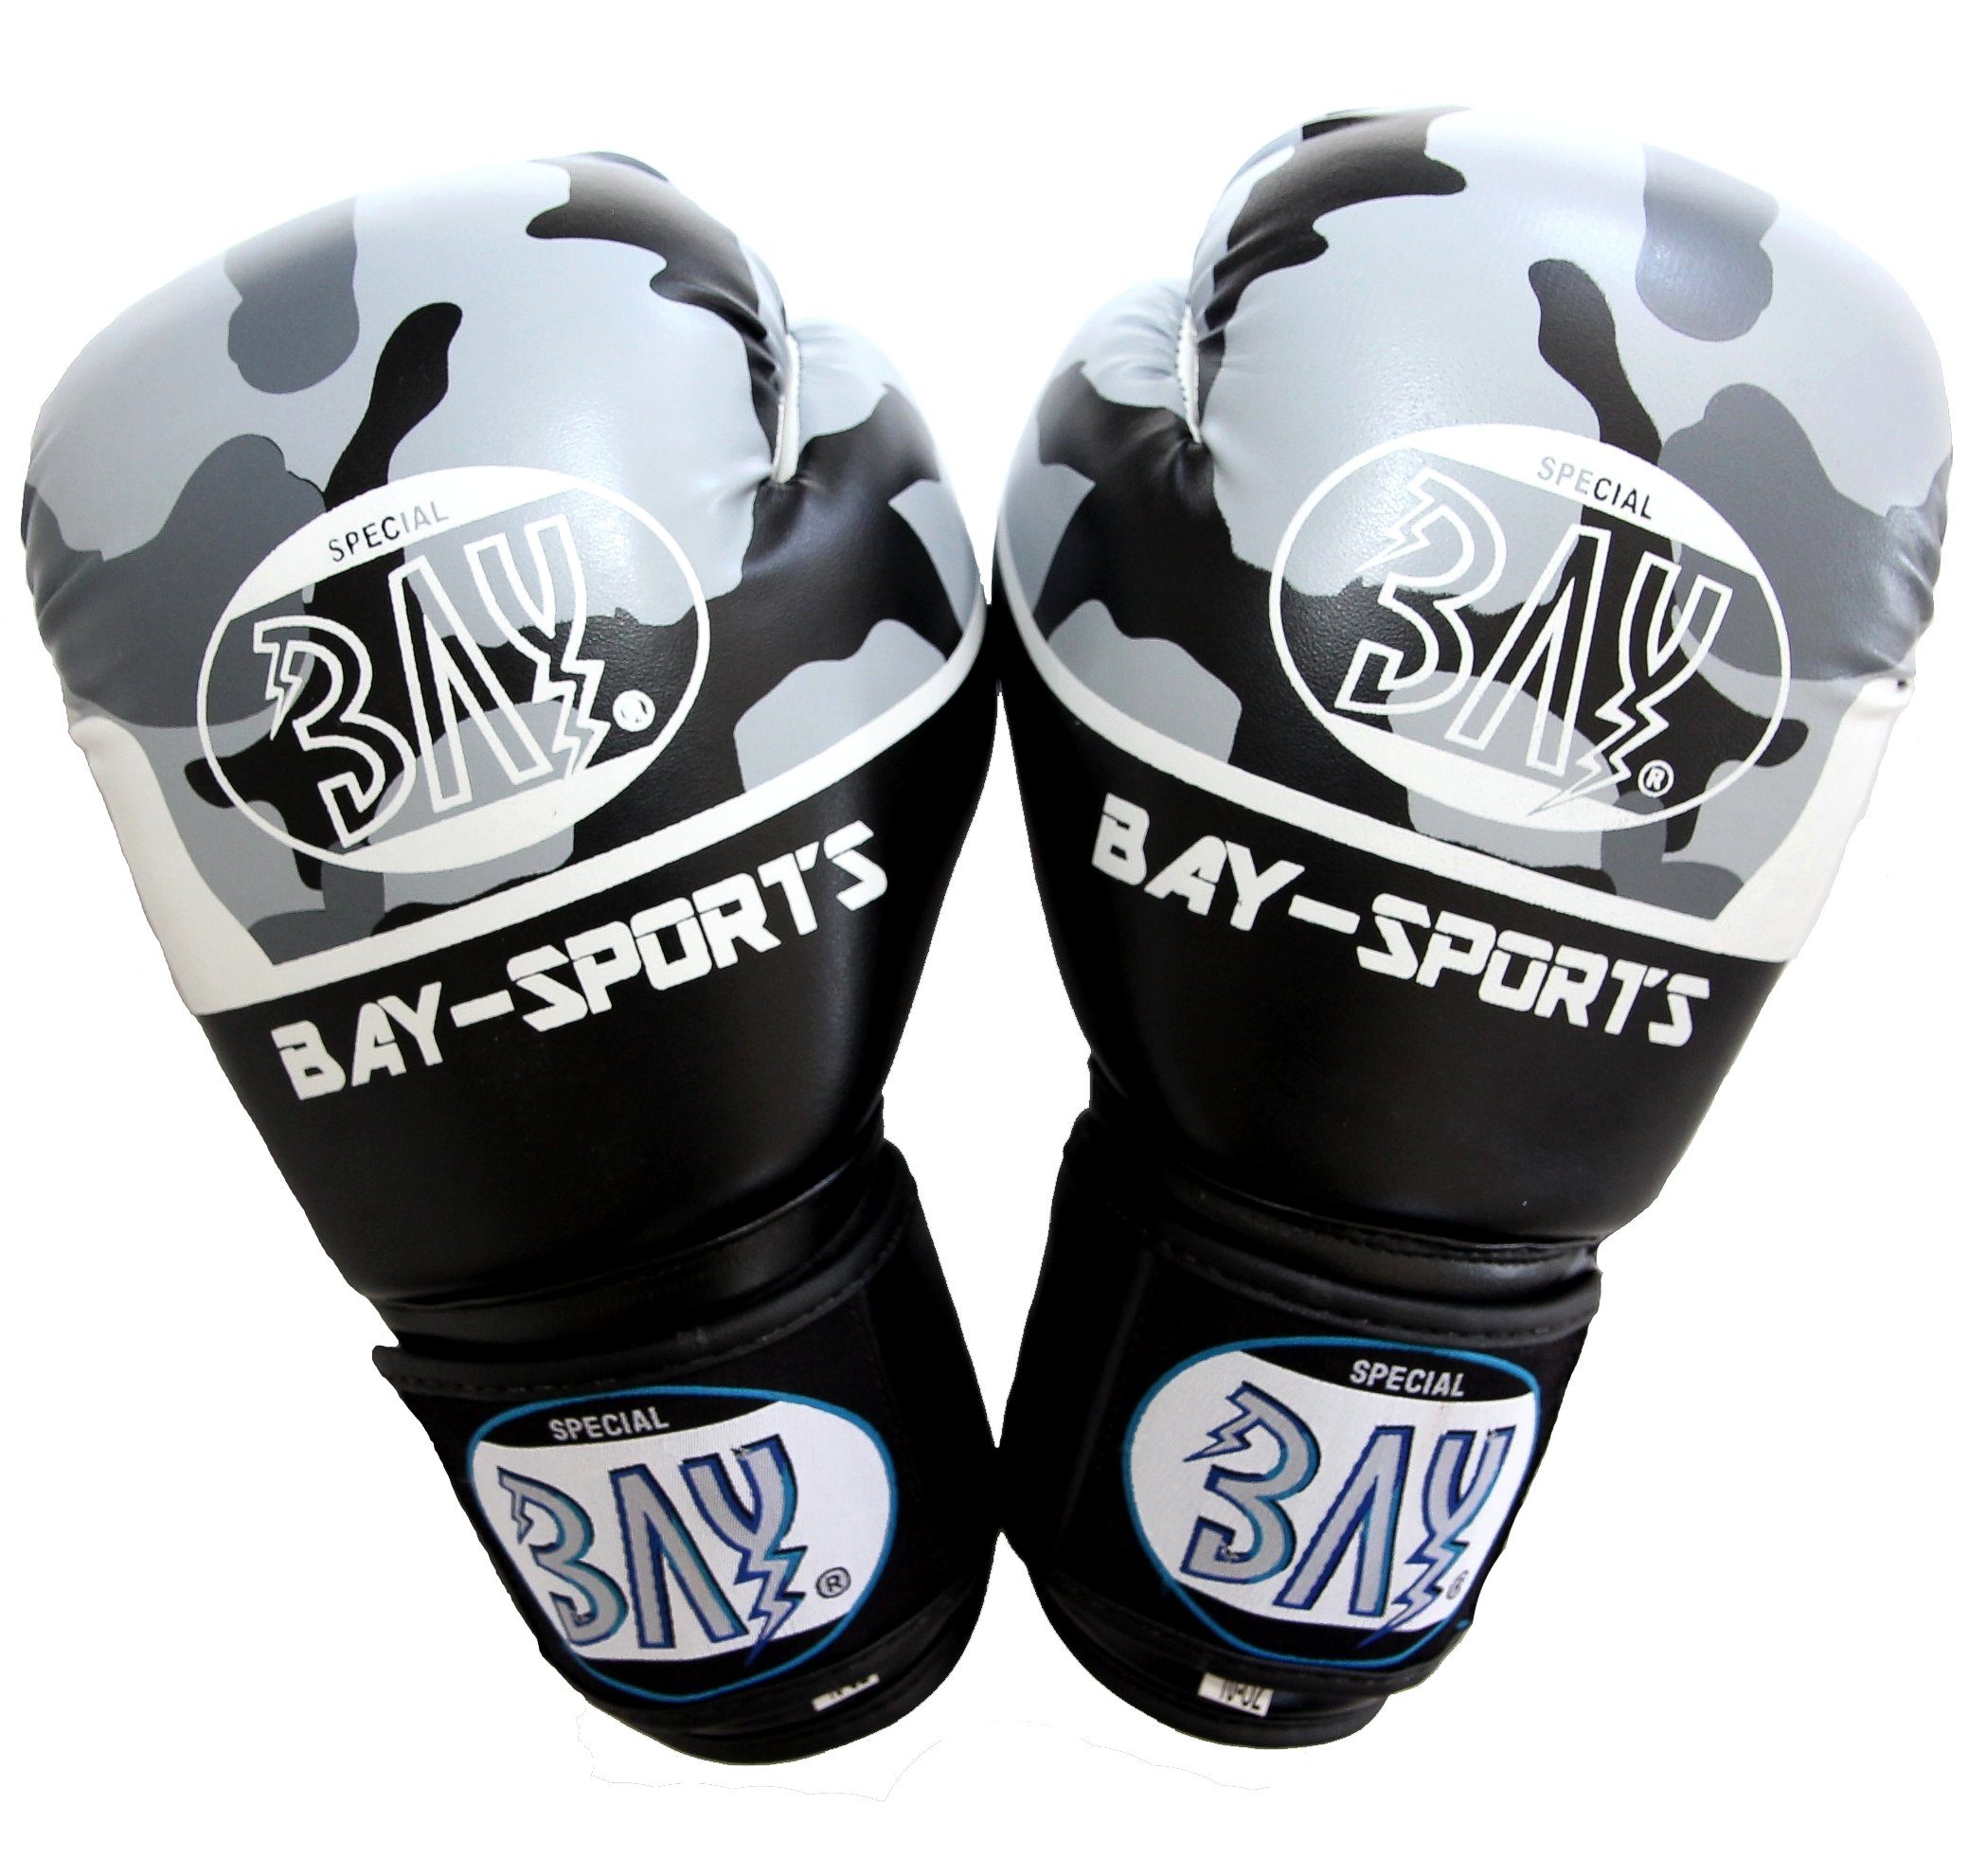 Sport Kampfsportausrüstung BAY-Sports Boxhandschuhe Camouflage Box-Handschuhe Boxen Kickboxen